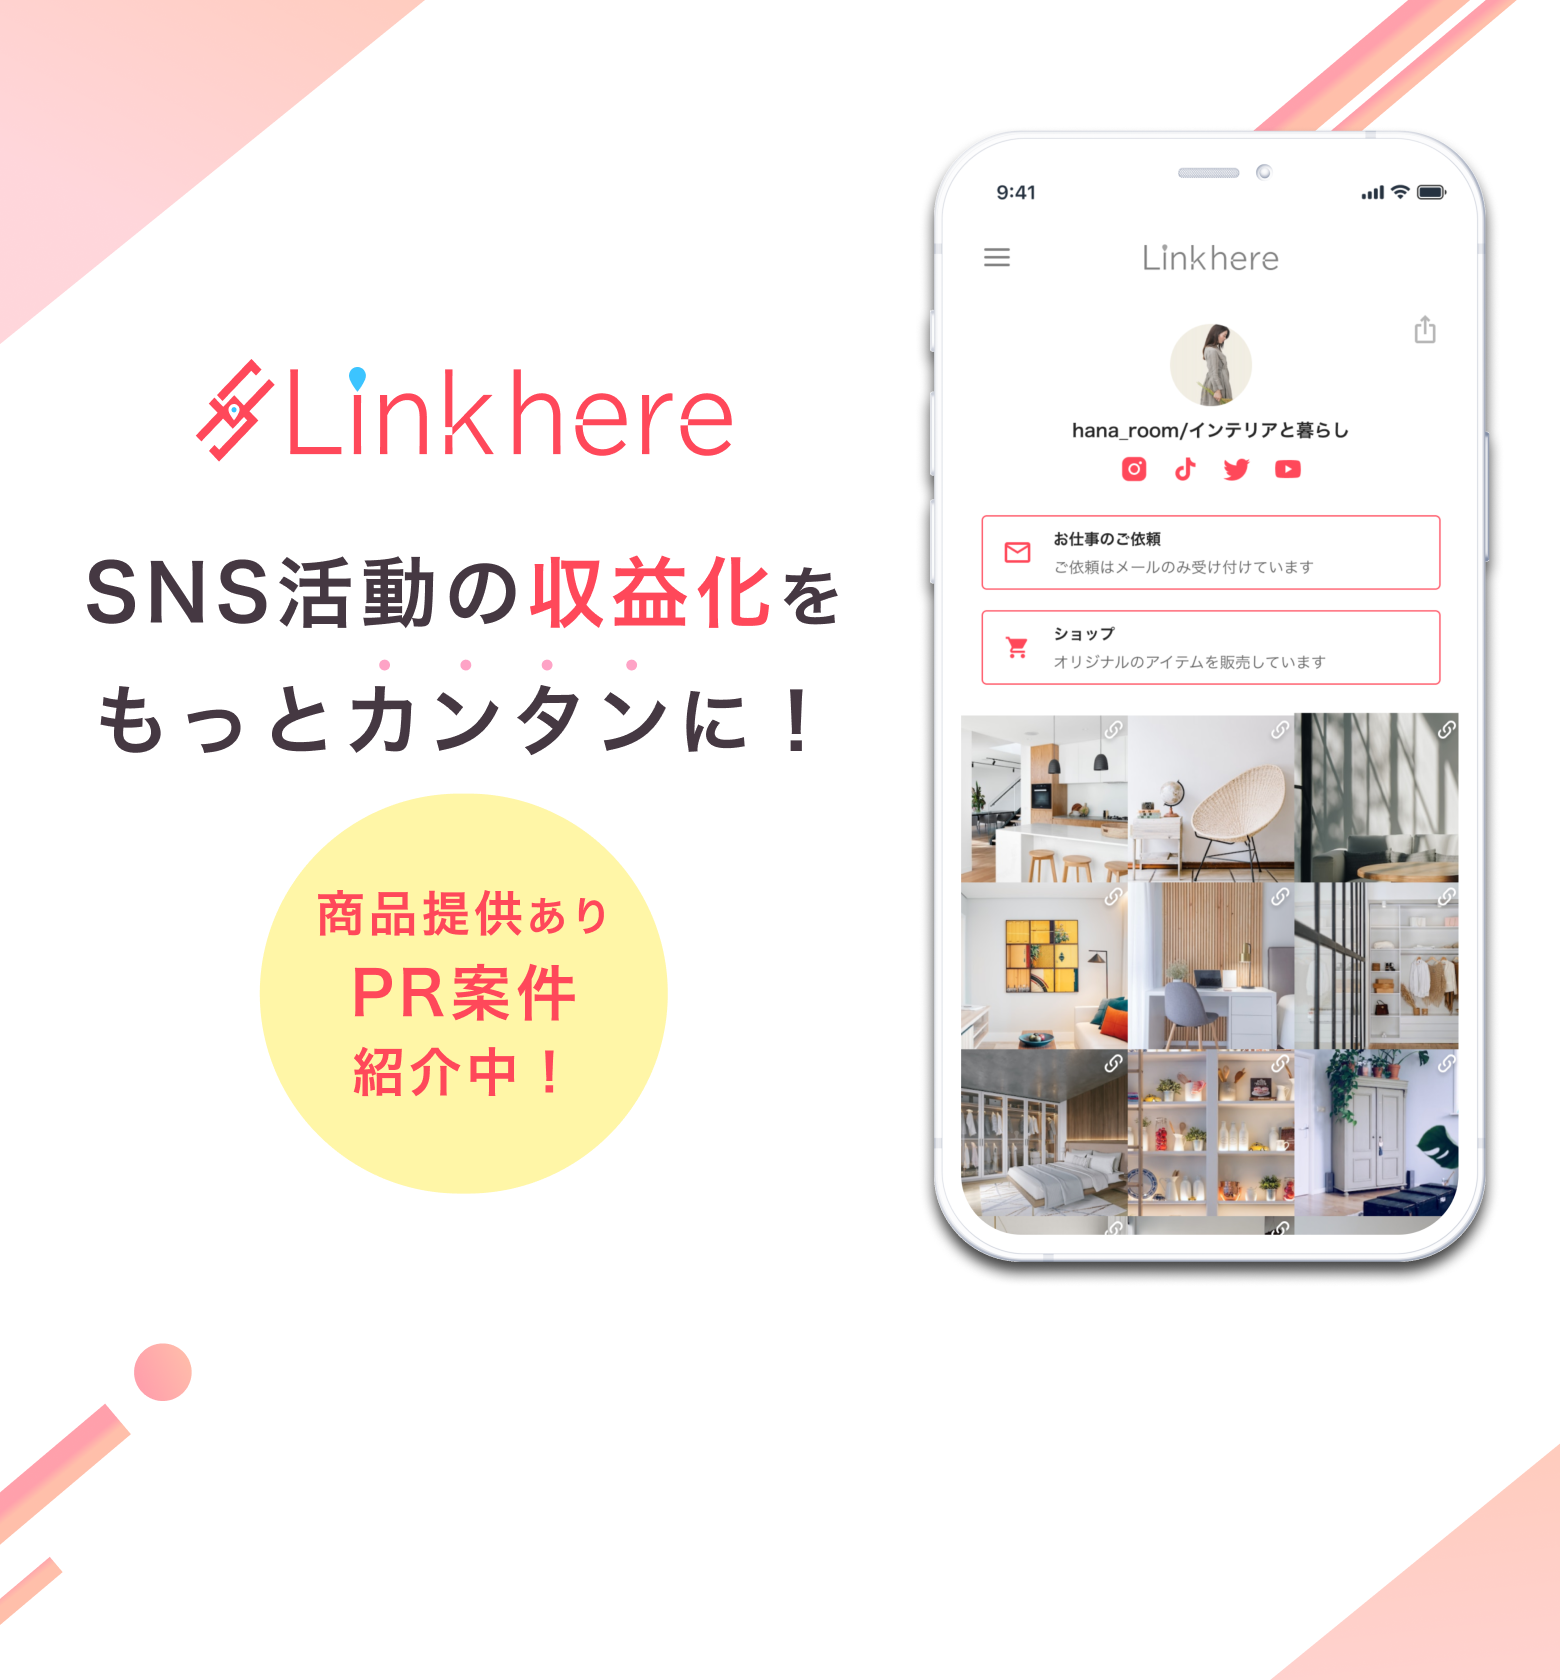 Linkhere SNS活動の収益化をもっとカンタンに！